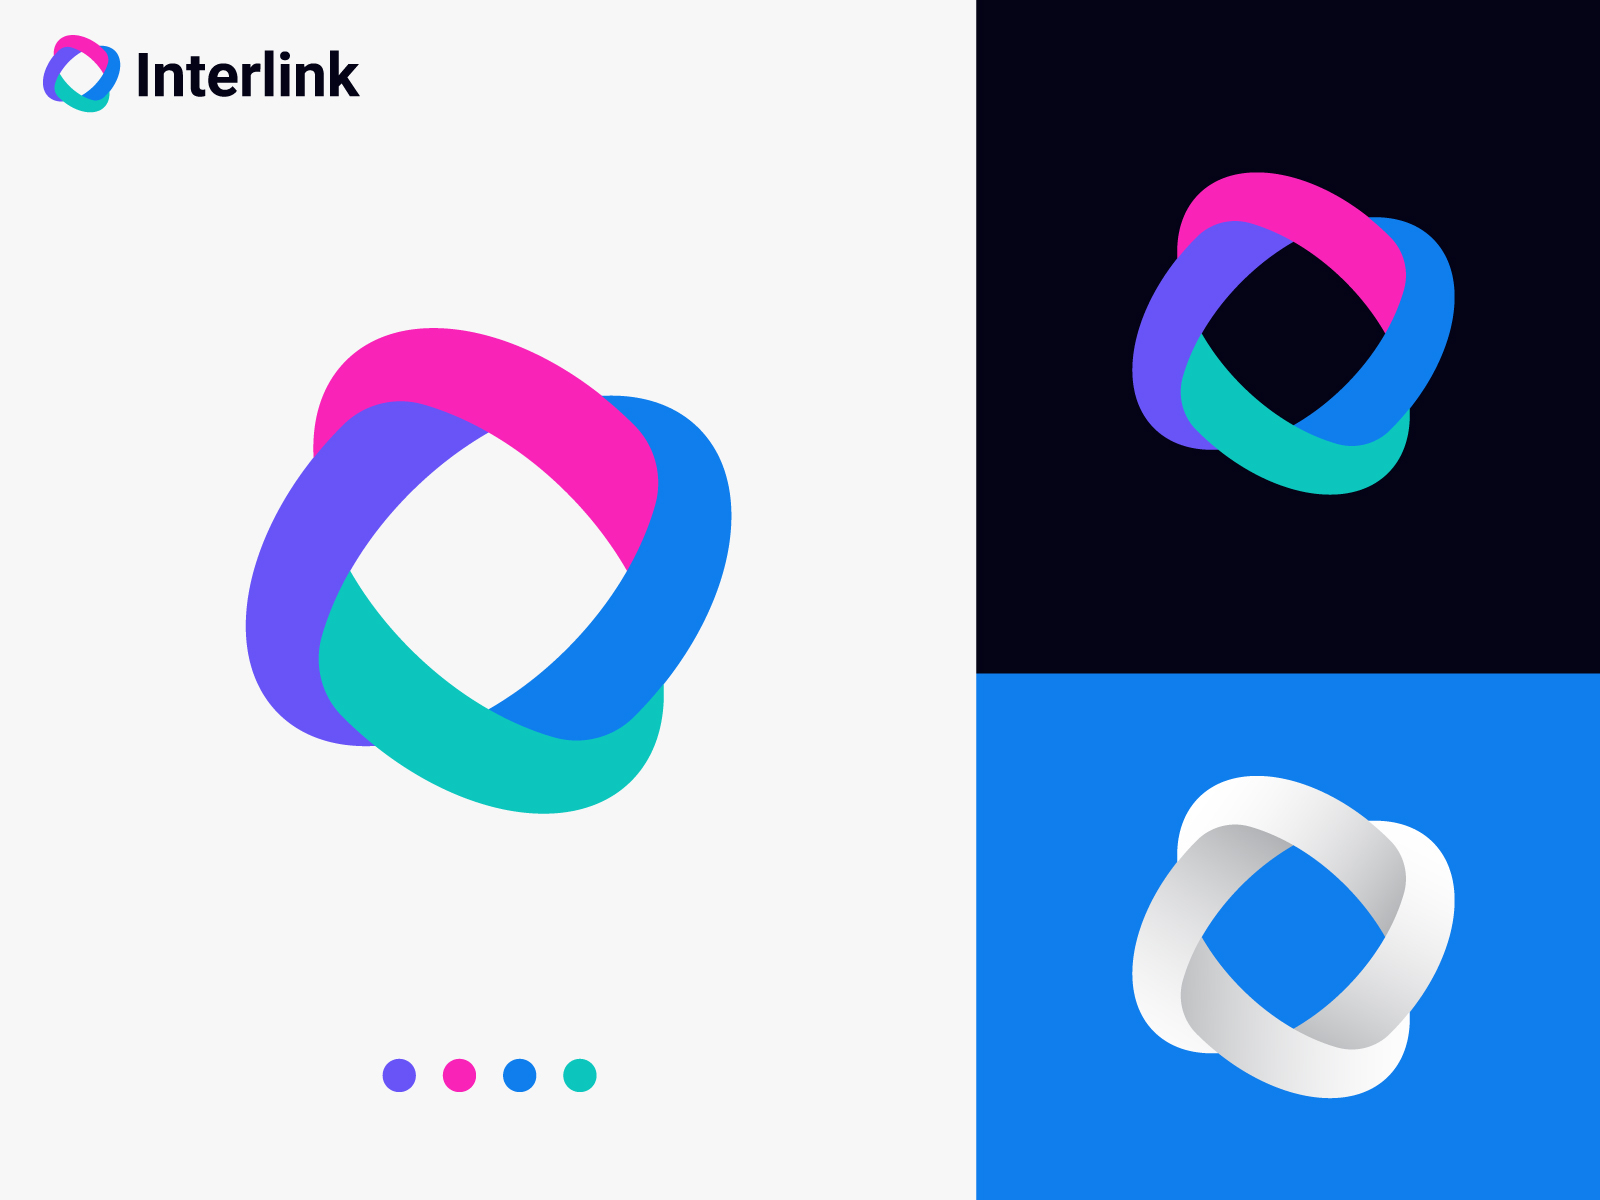 Interlink brand logo design by Farhad Hossain on Dribbble